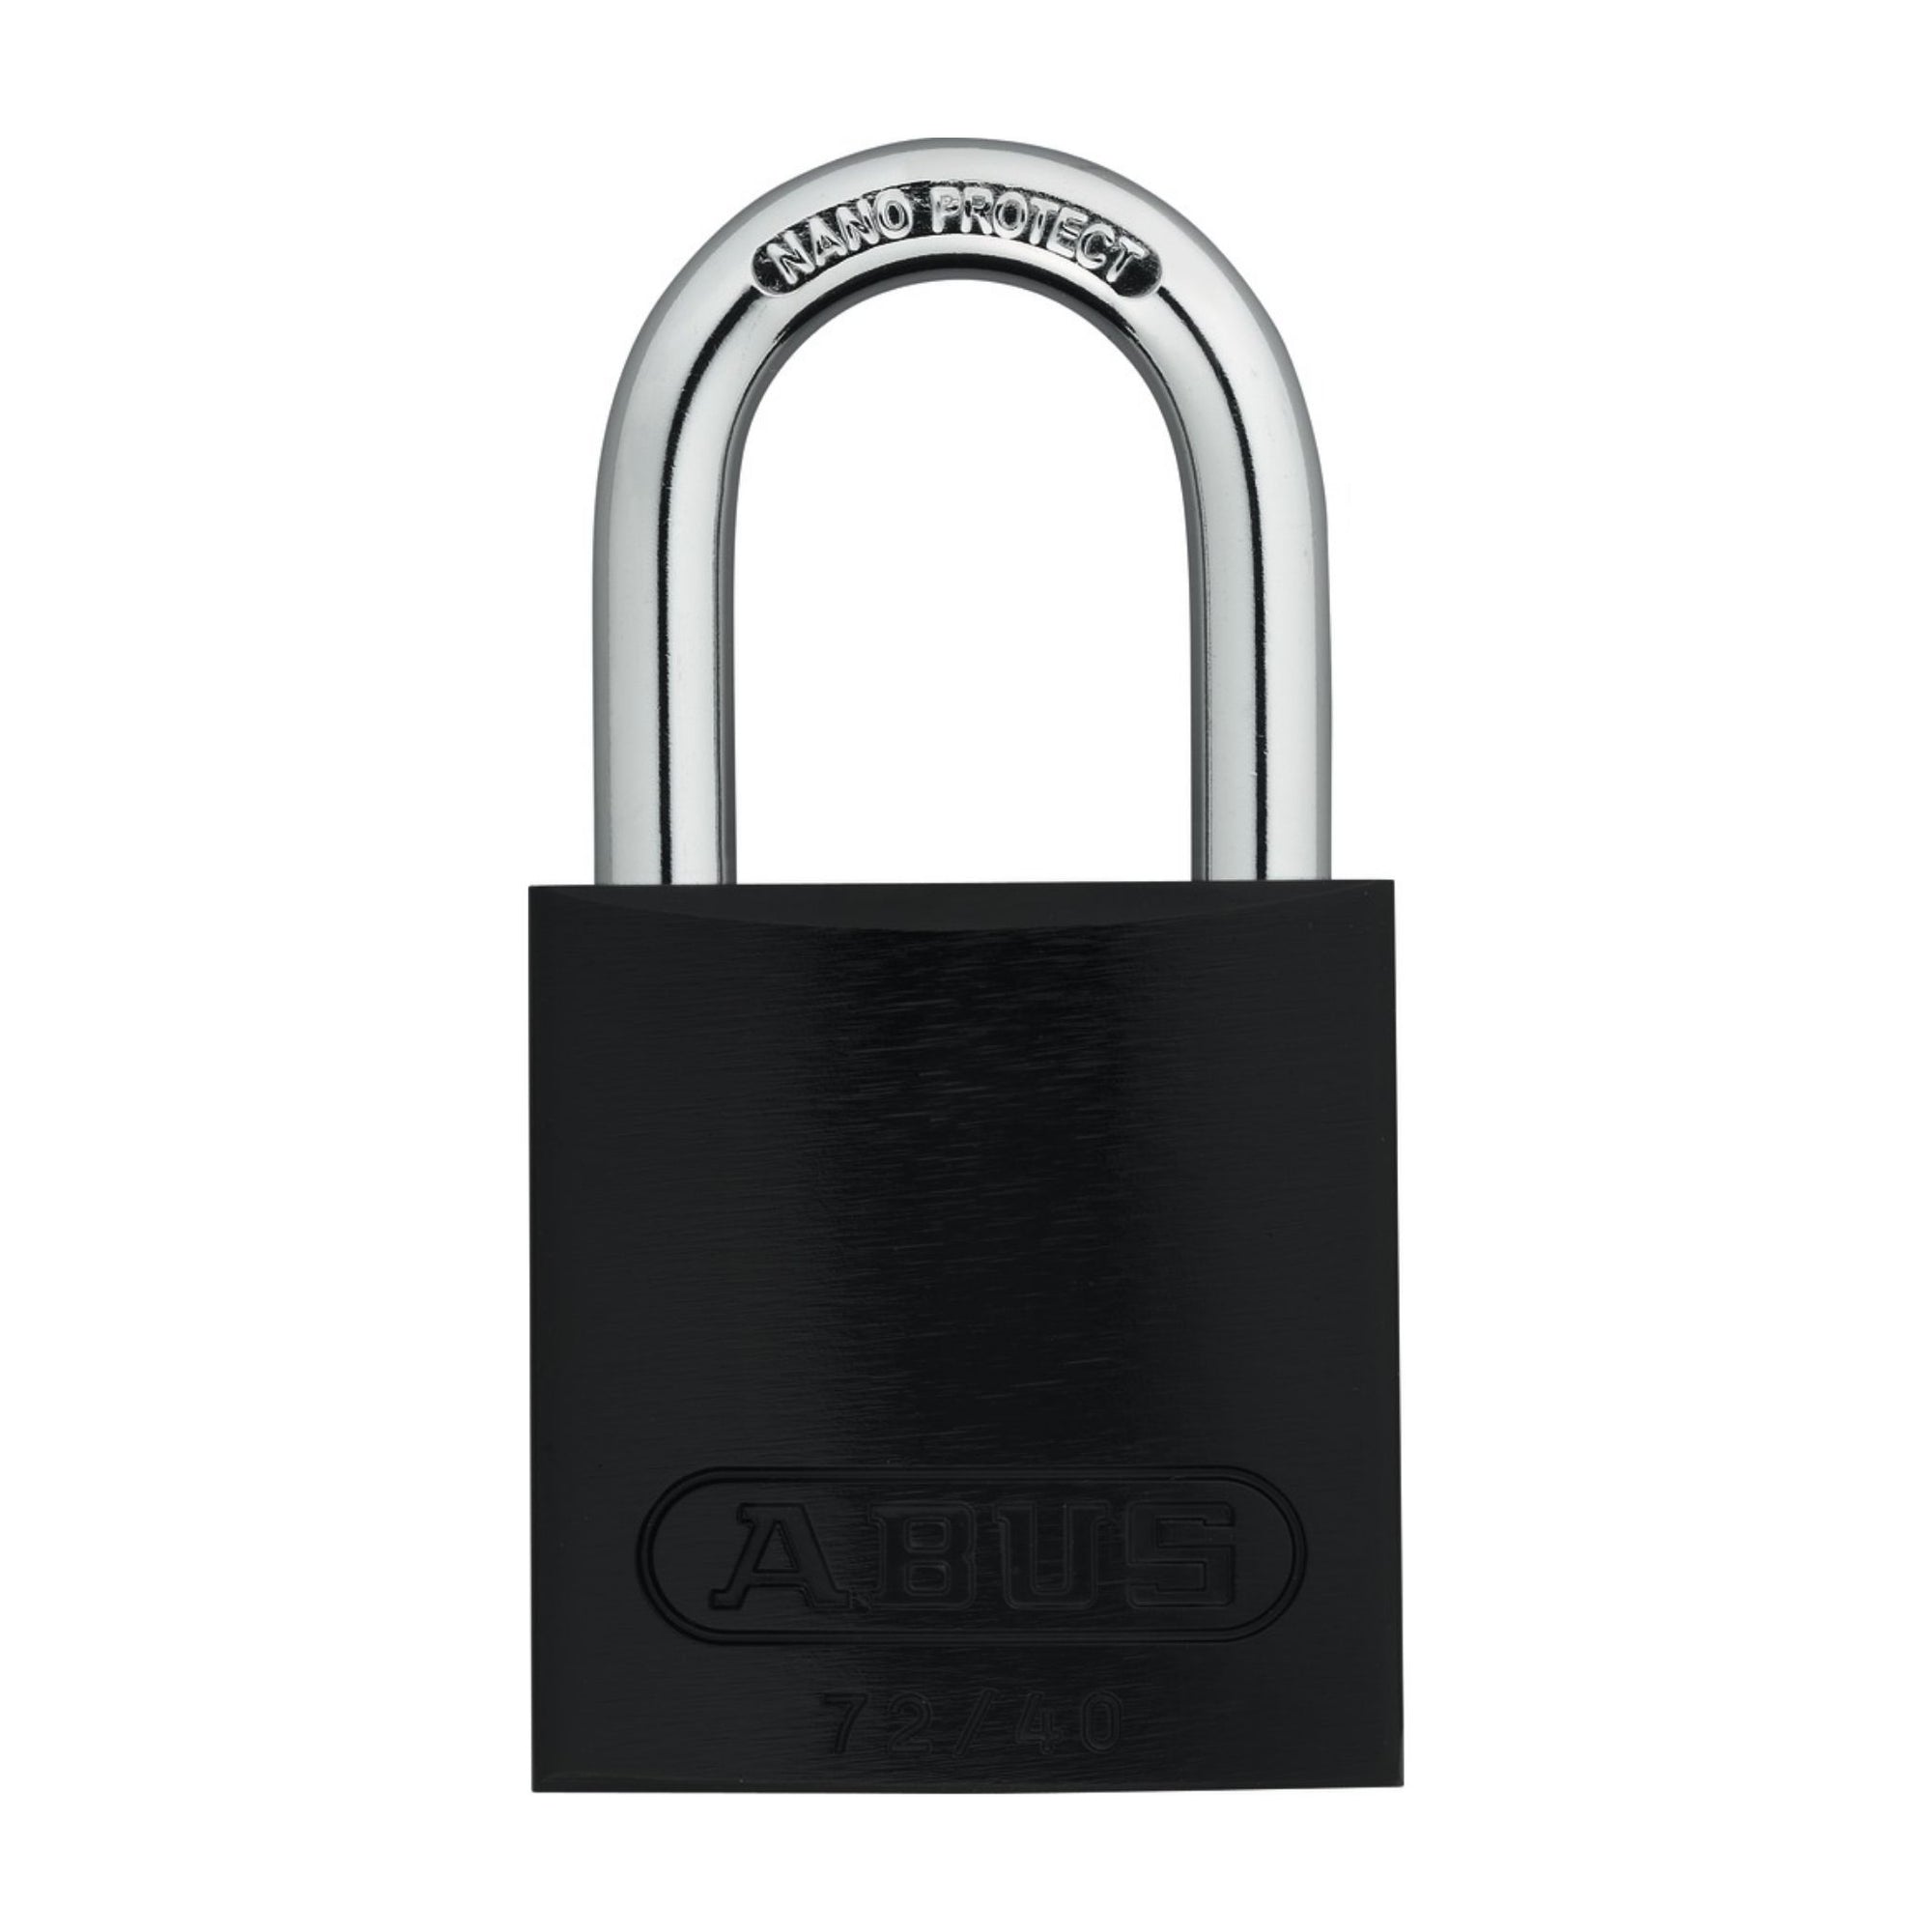 Abus 72/40 KA TT00036 Black Titalium Safety Padlock with 1-Inch Shackle, Keyed Alike to Match Existing Key Number KATT00036 - The Lock Source 